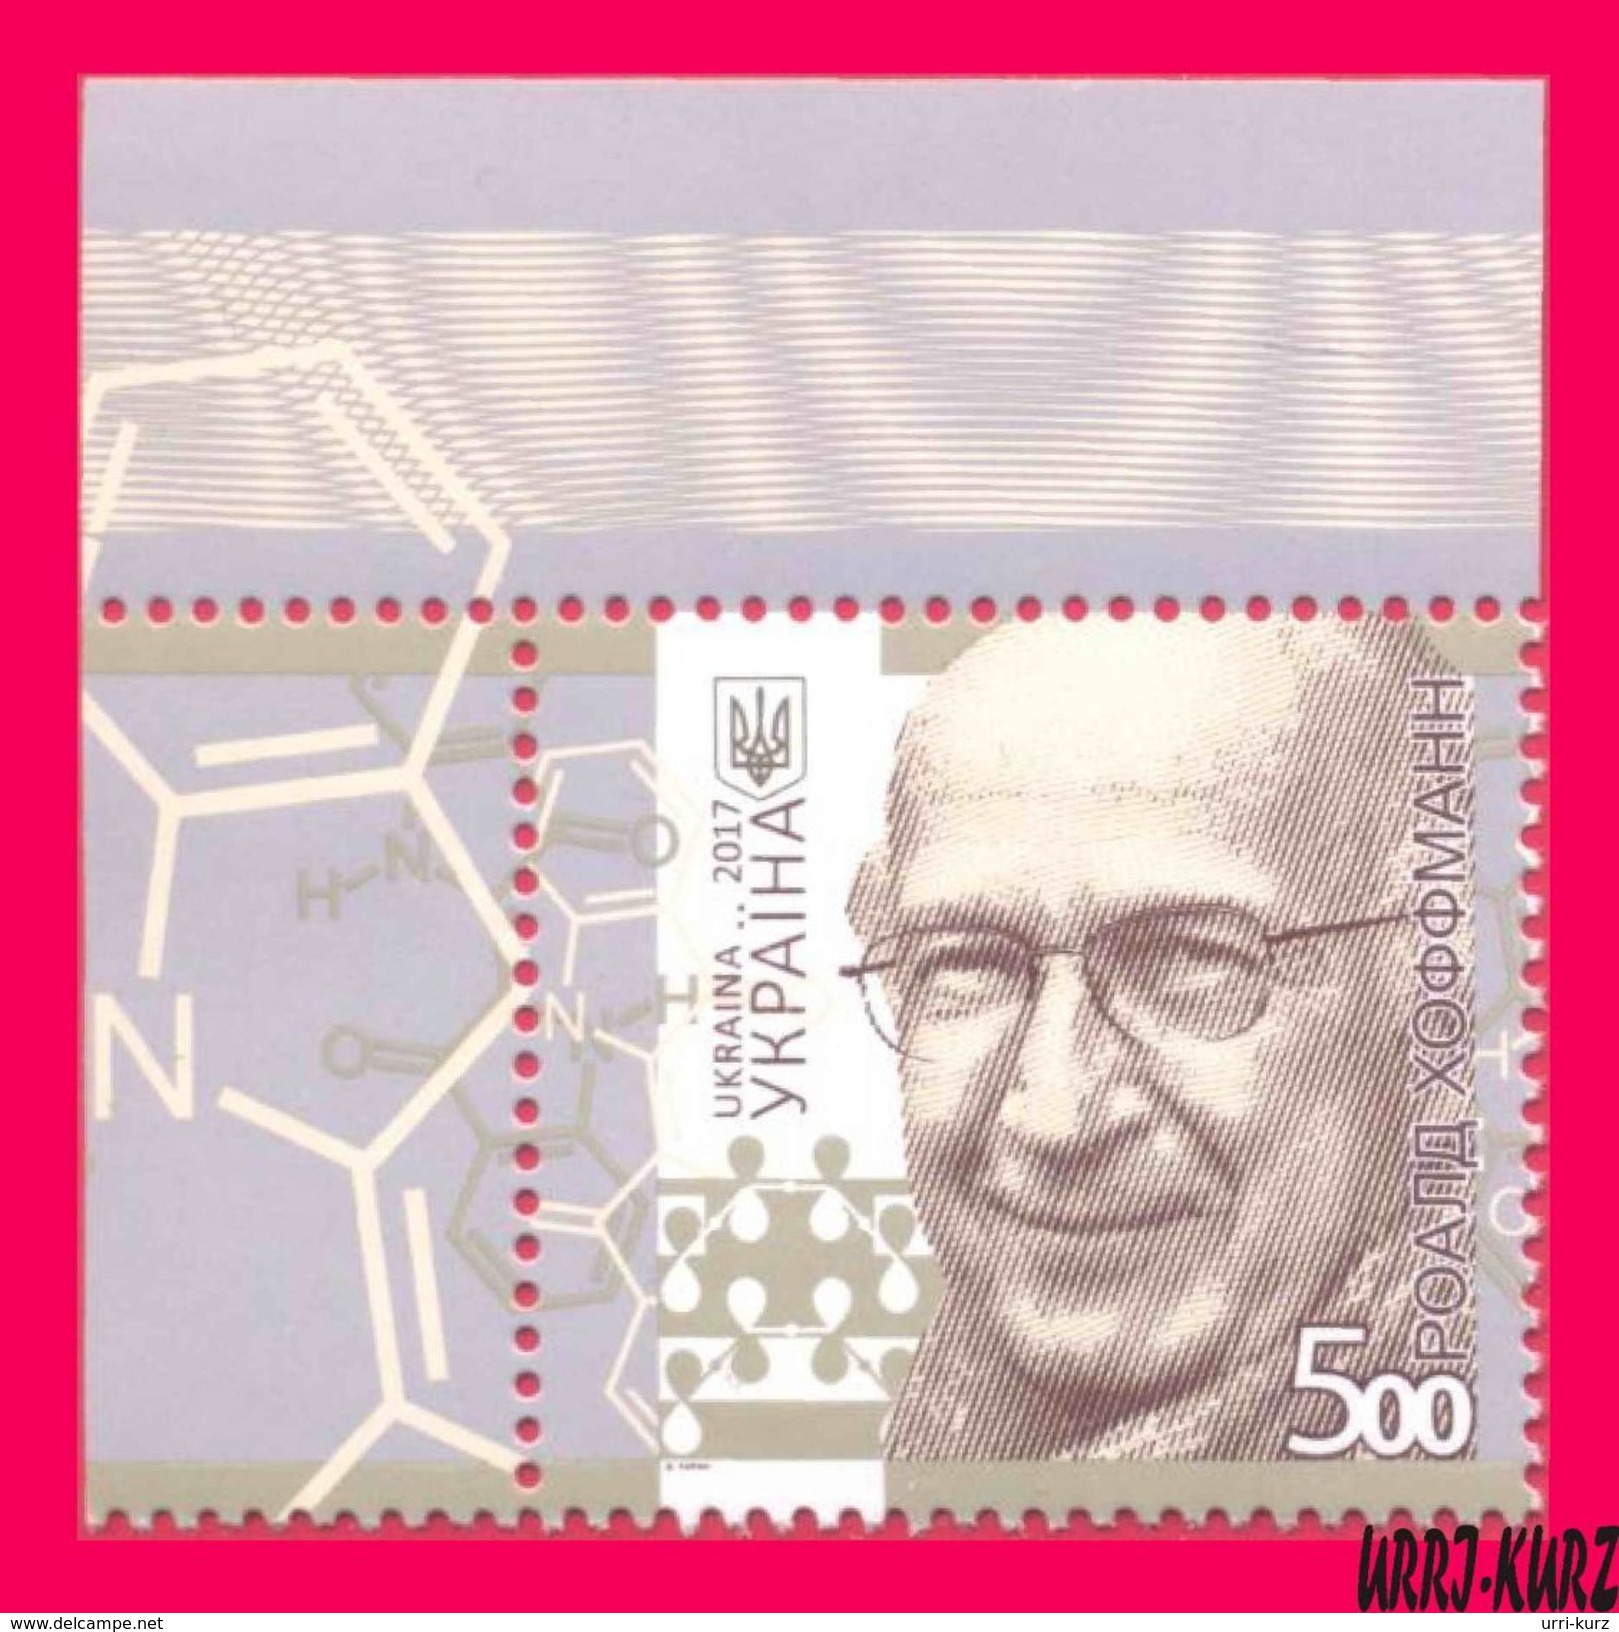 UKRAINE 2017 Famous People Scientist Chemist Nobel Prize Laureate Roald Hoffmann 1v Mi1625 MNH - Chemistry